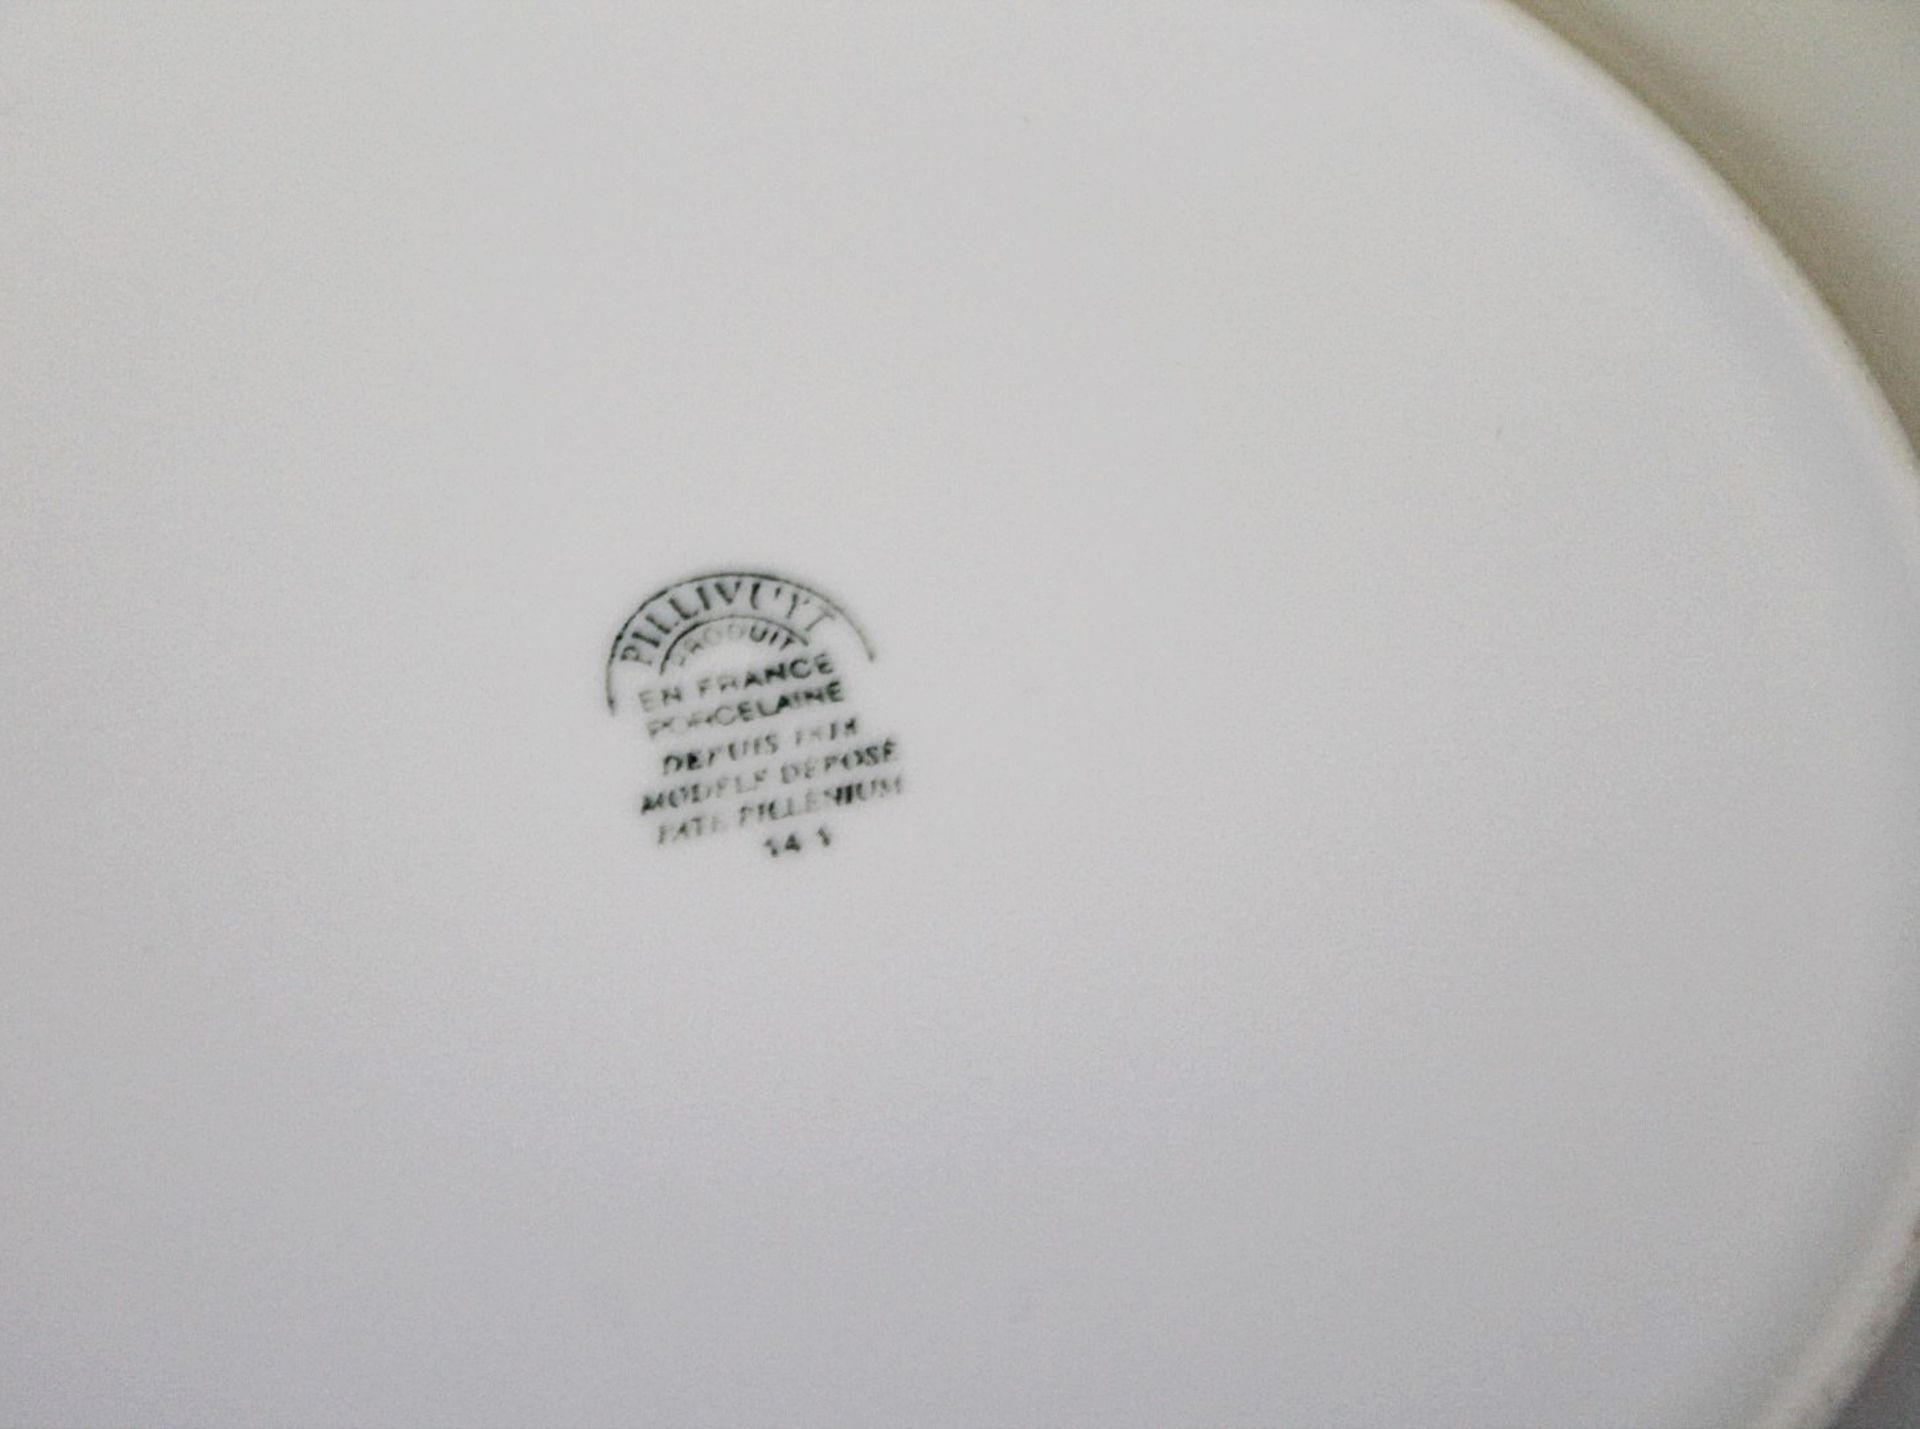 20 x PILLIVUYT Porcelain Small Dinner / Dessert Plates In White Featuring 'Famous Branding' - Image 4 of 4